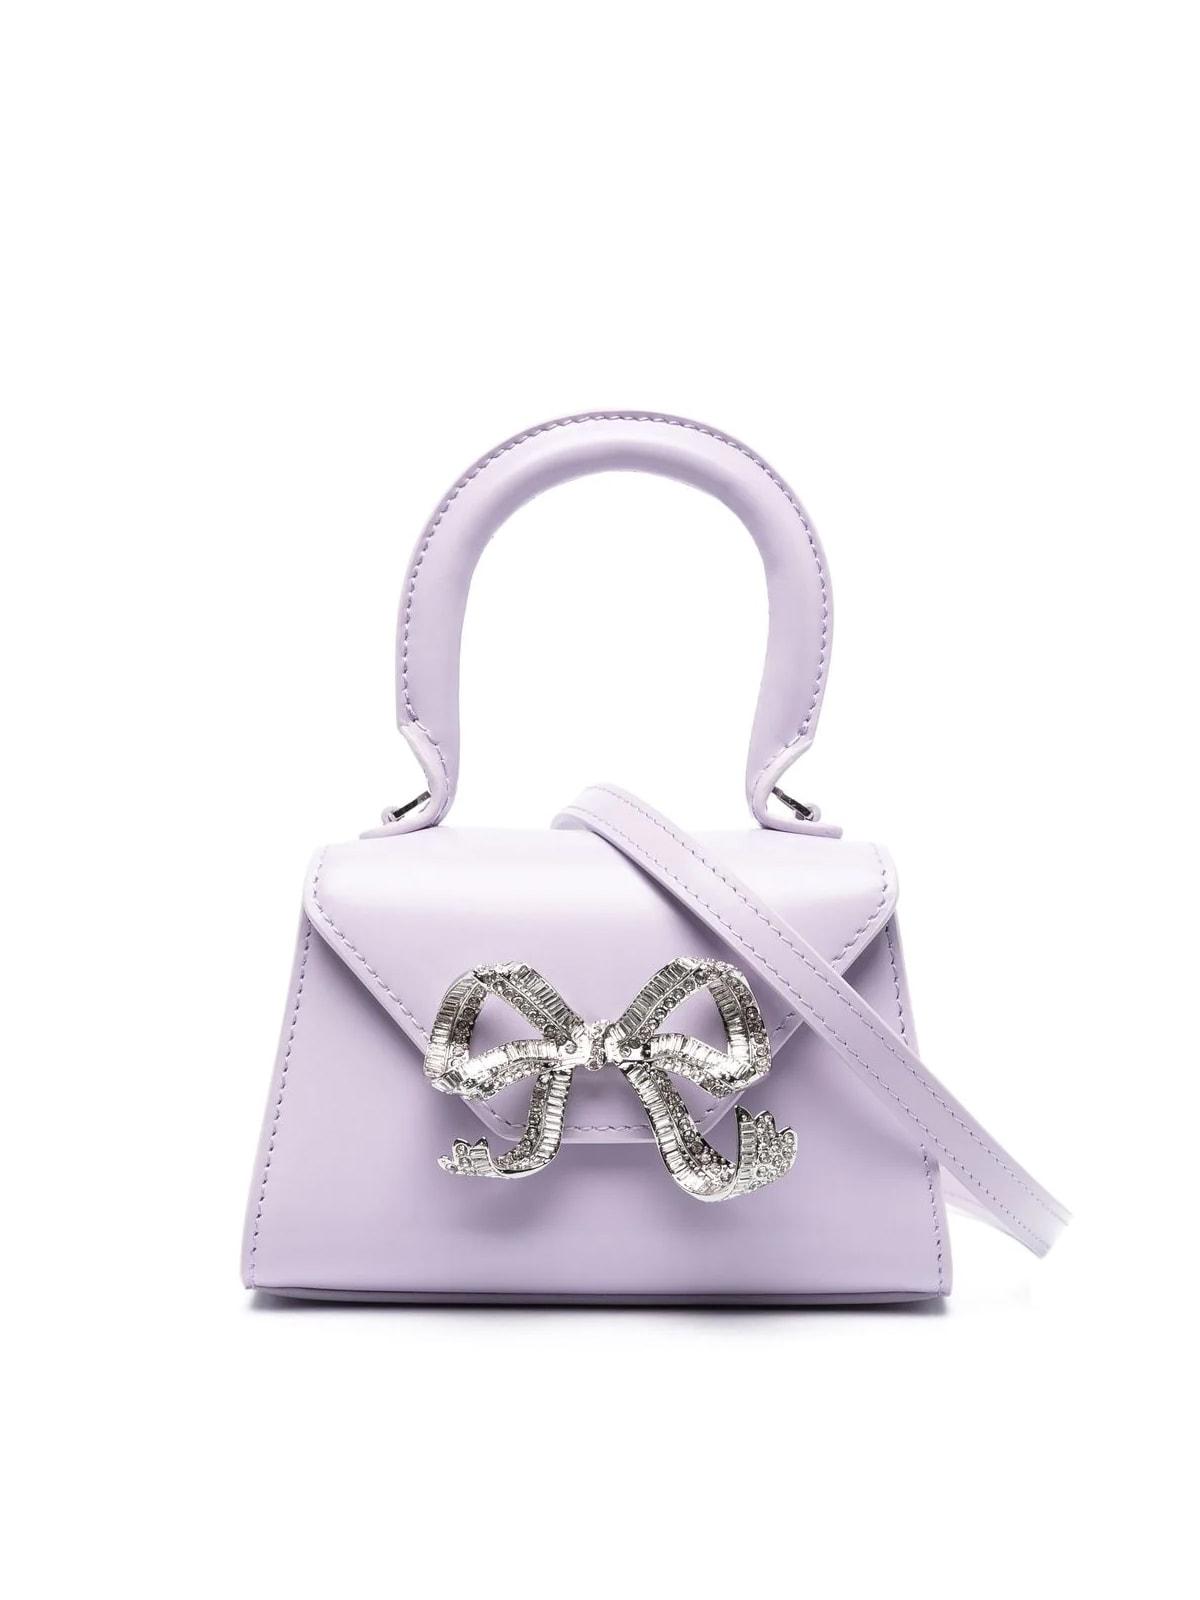 Self-Portrait Lilac Bow Micro Envelope Bag in Purple